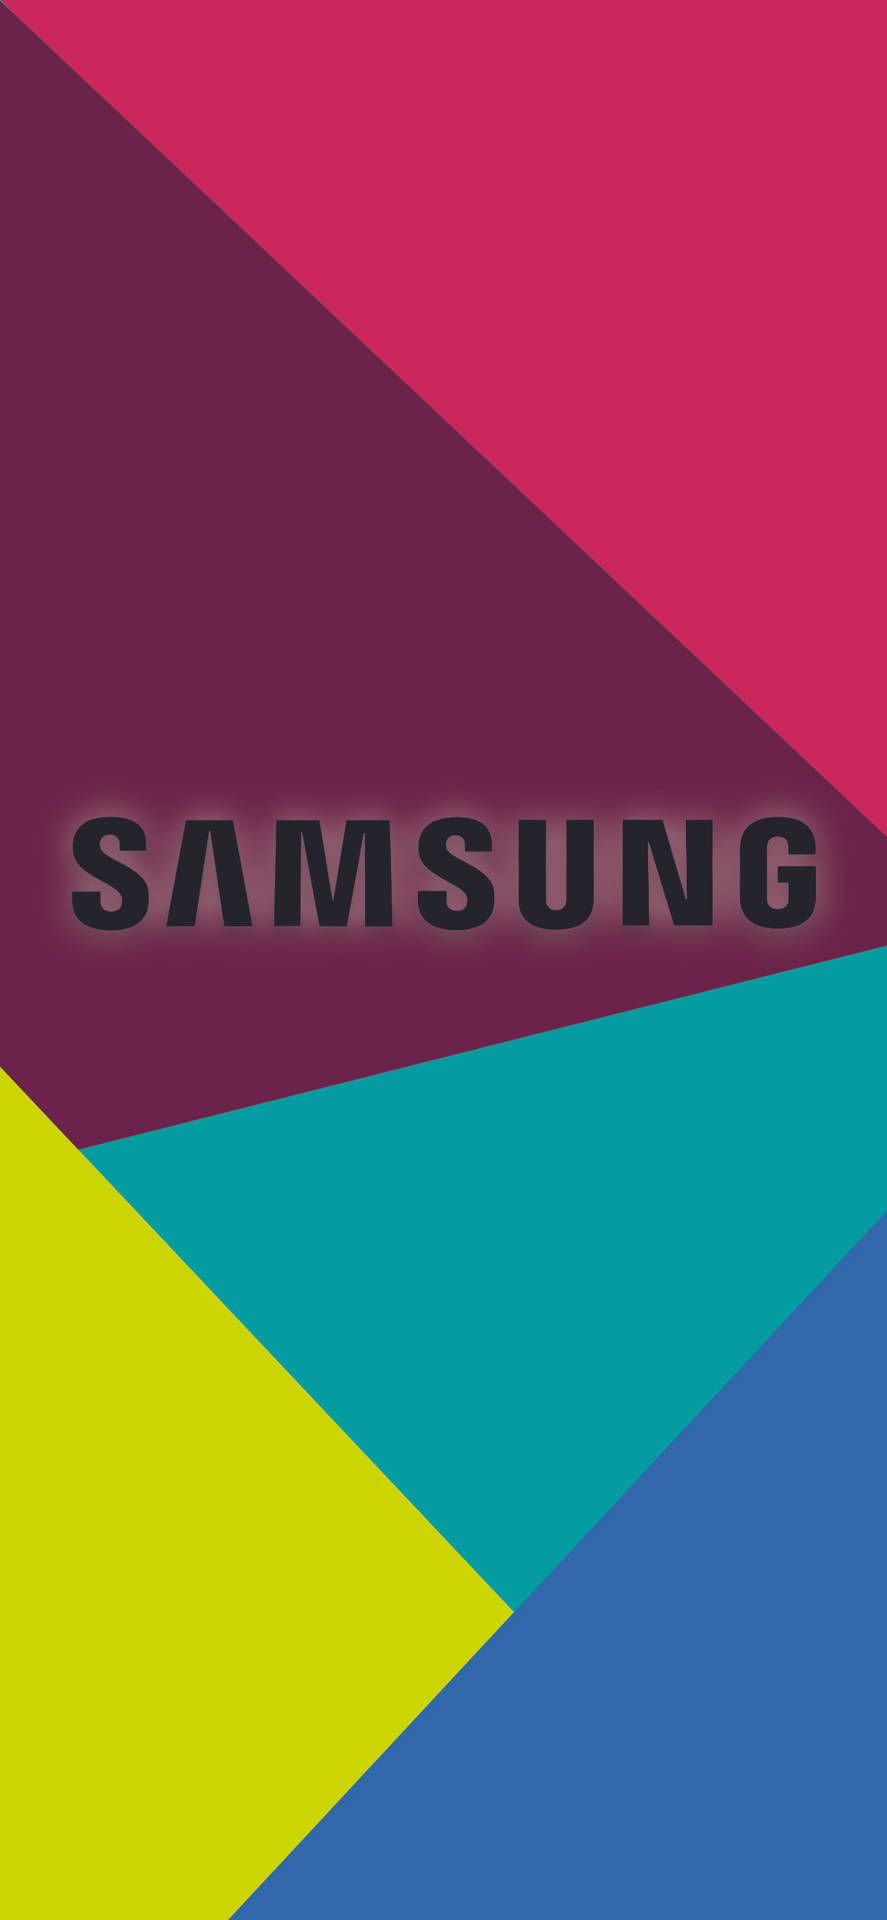 Samsung Galaxy Triangular Vector Pattern